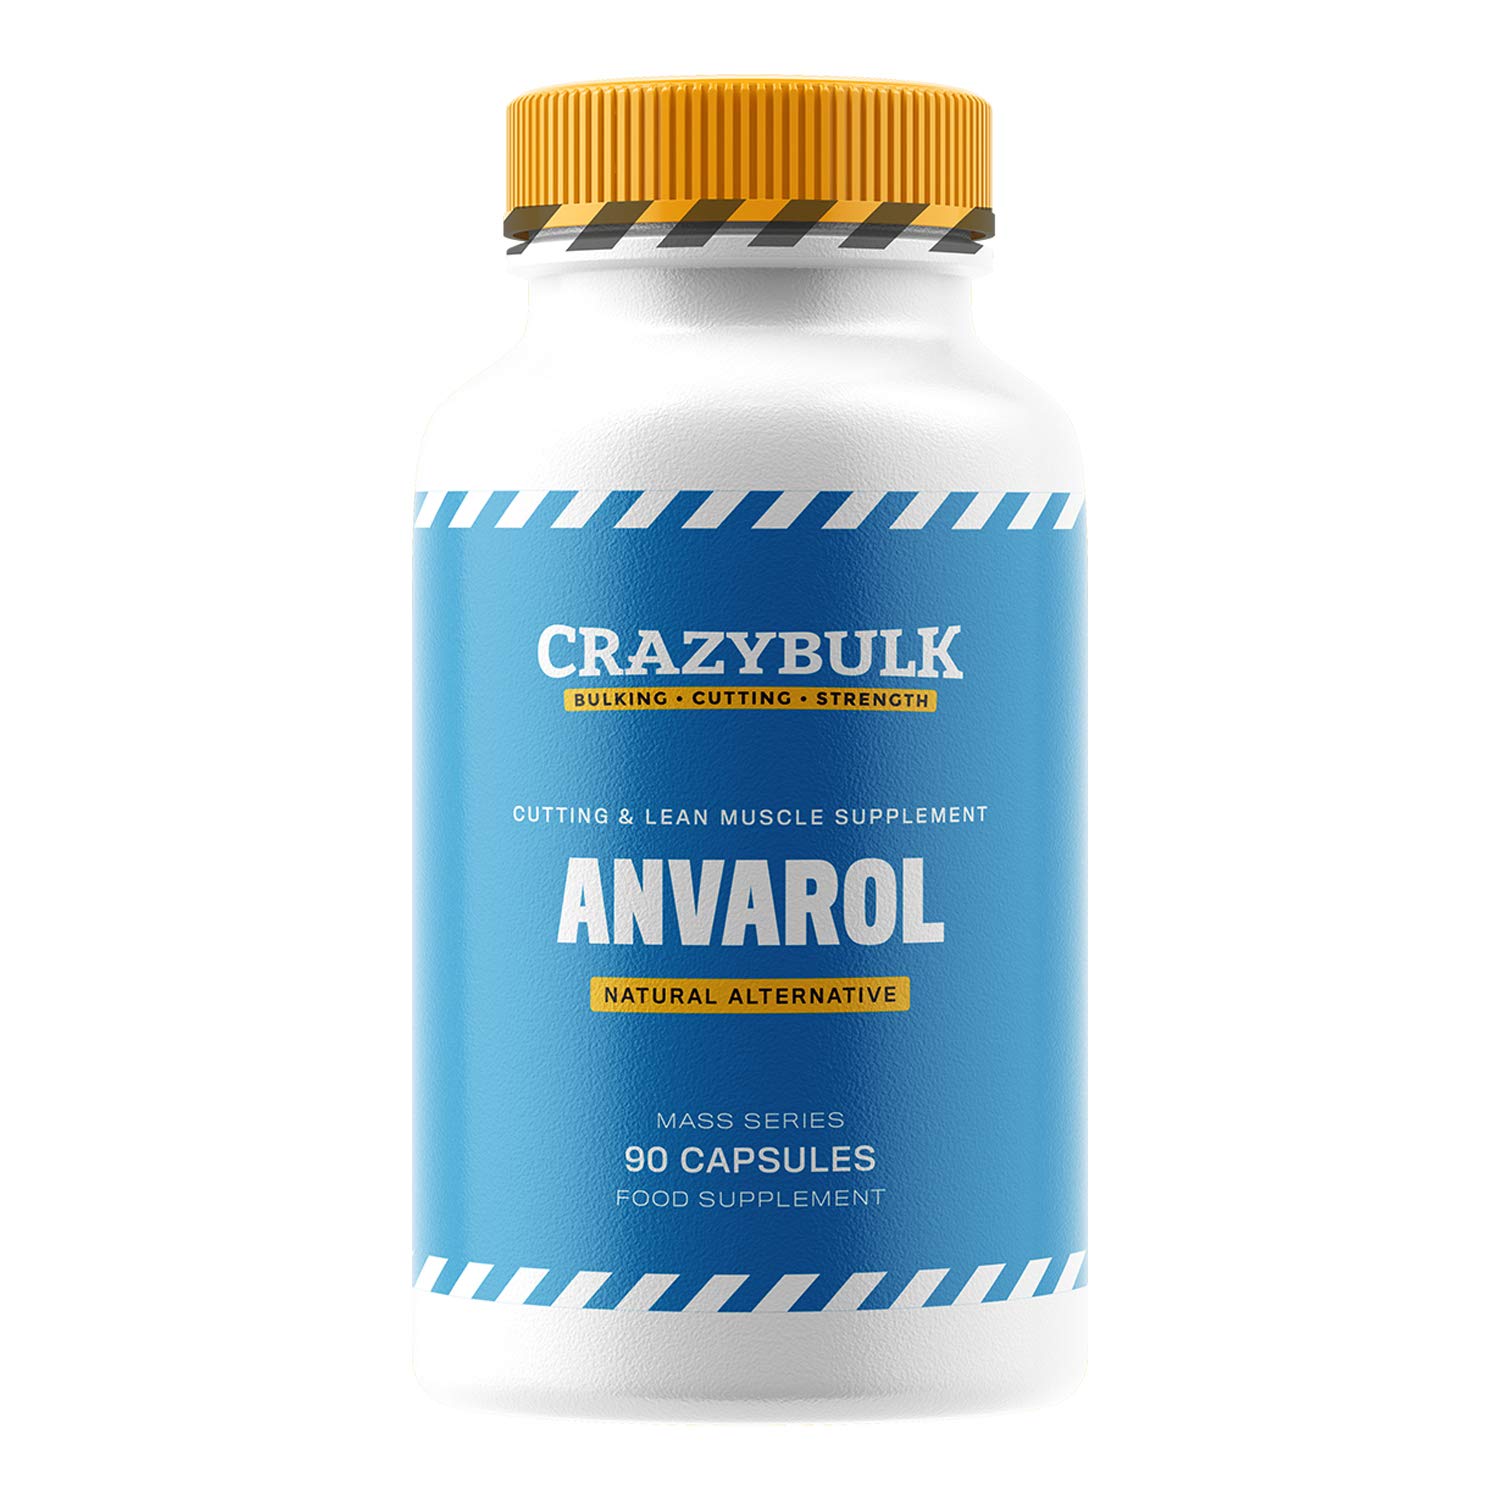 avarol - How Much Anavar Should I Take a Day?